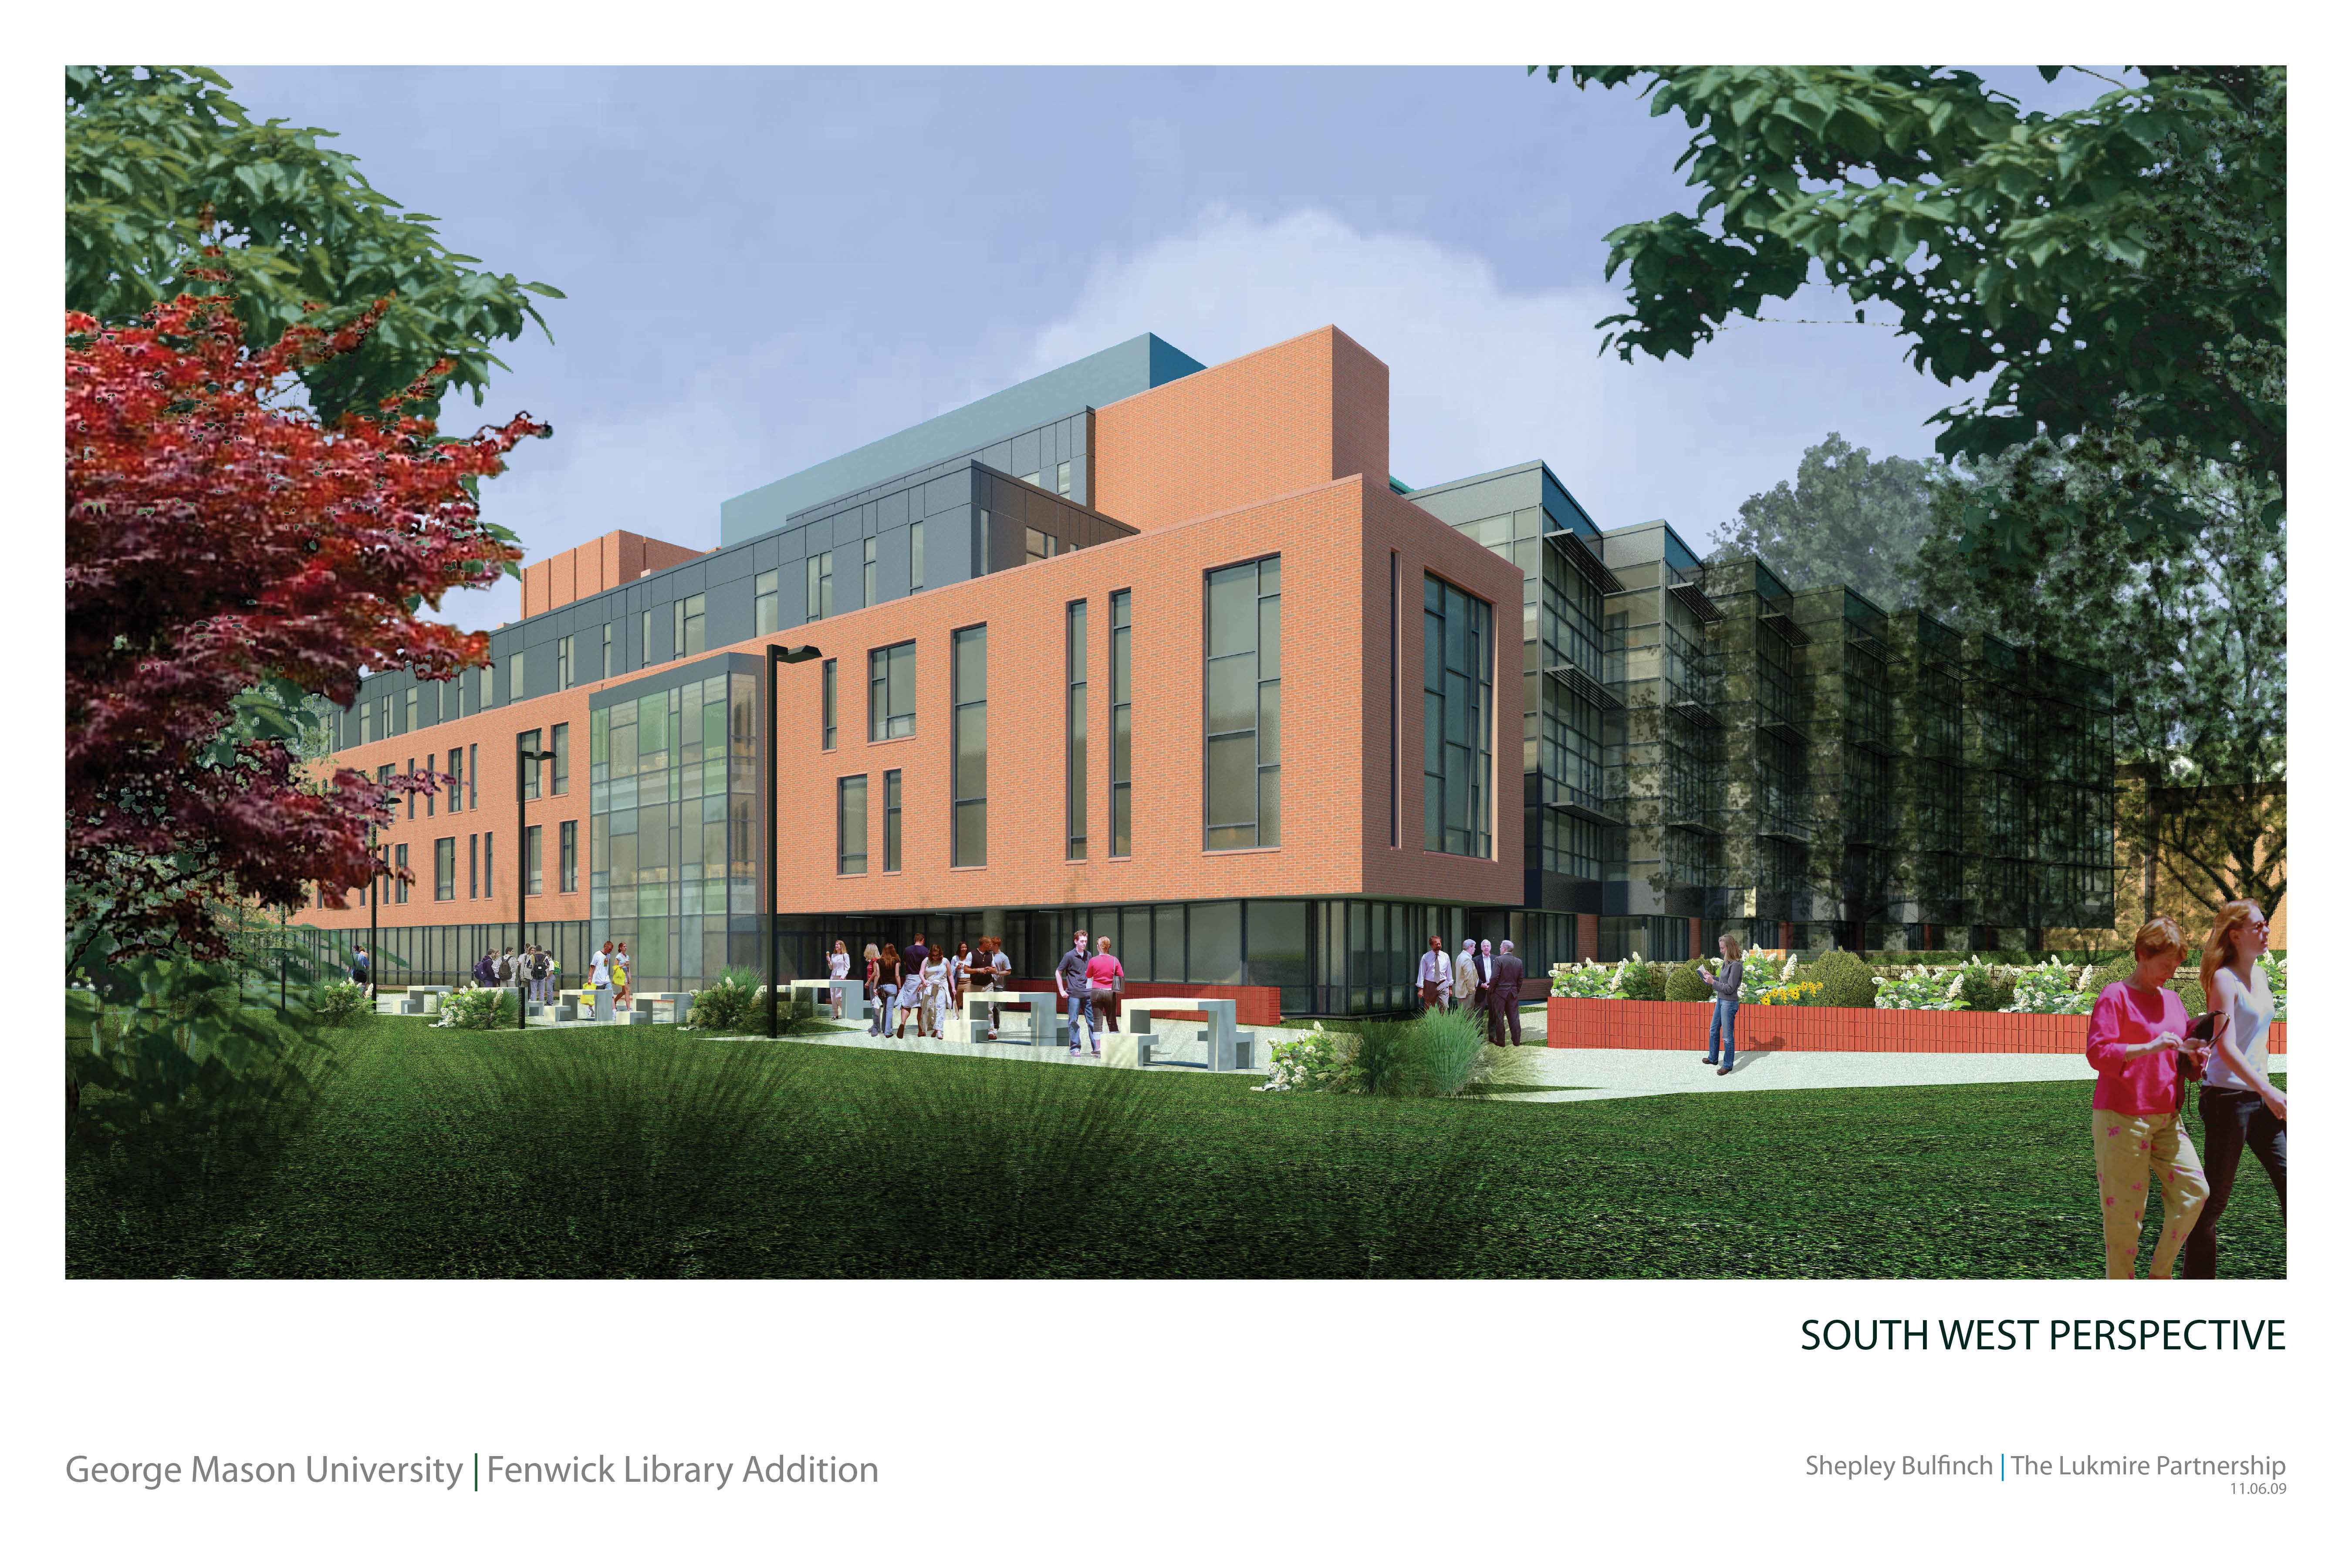 George Mason University: Fenwick Library addition southwest perspective, November 6, 2009 